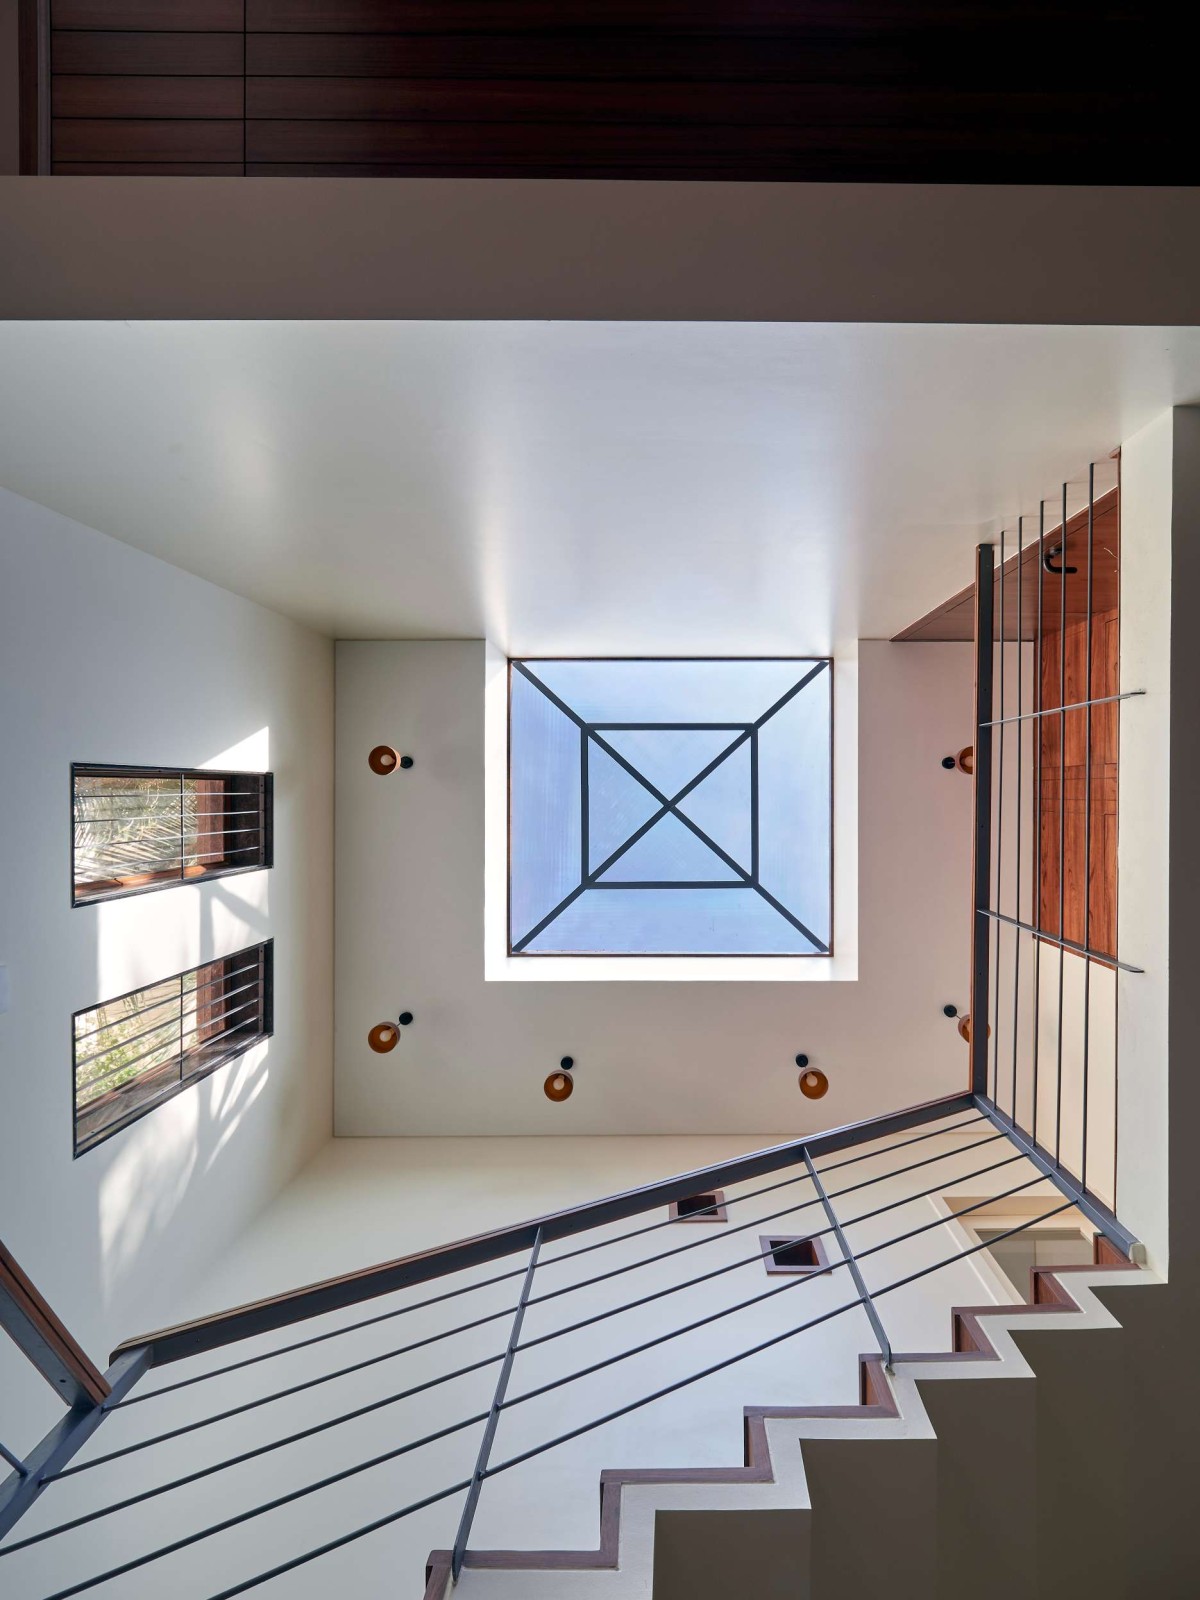 The Skylight of The Brick Abode by Alok Kothari Architects